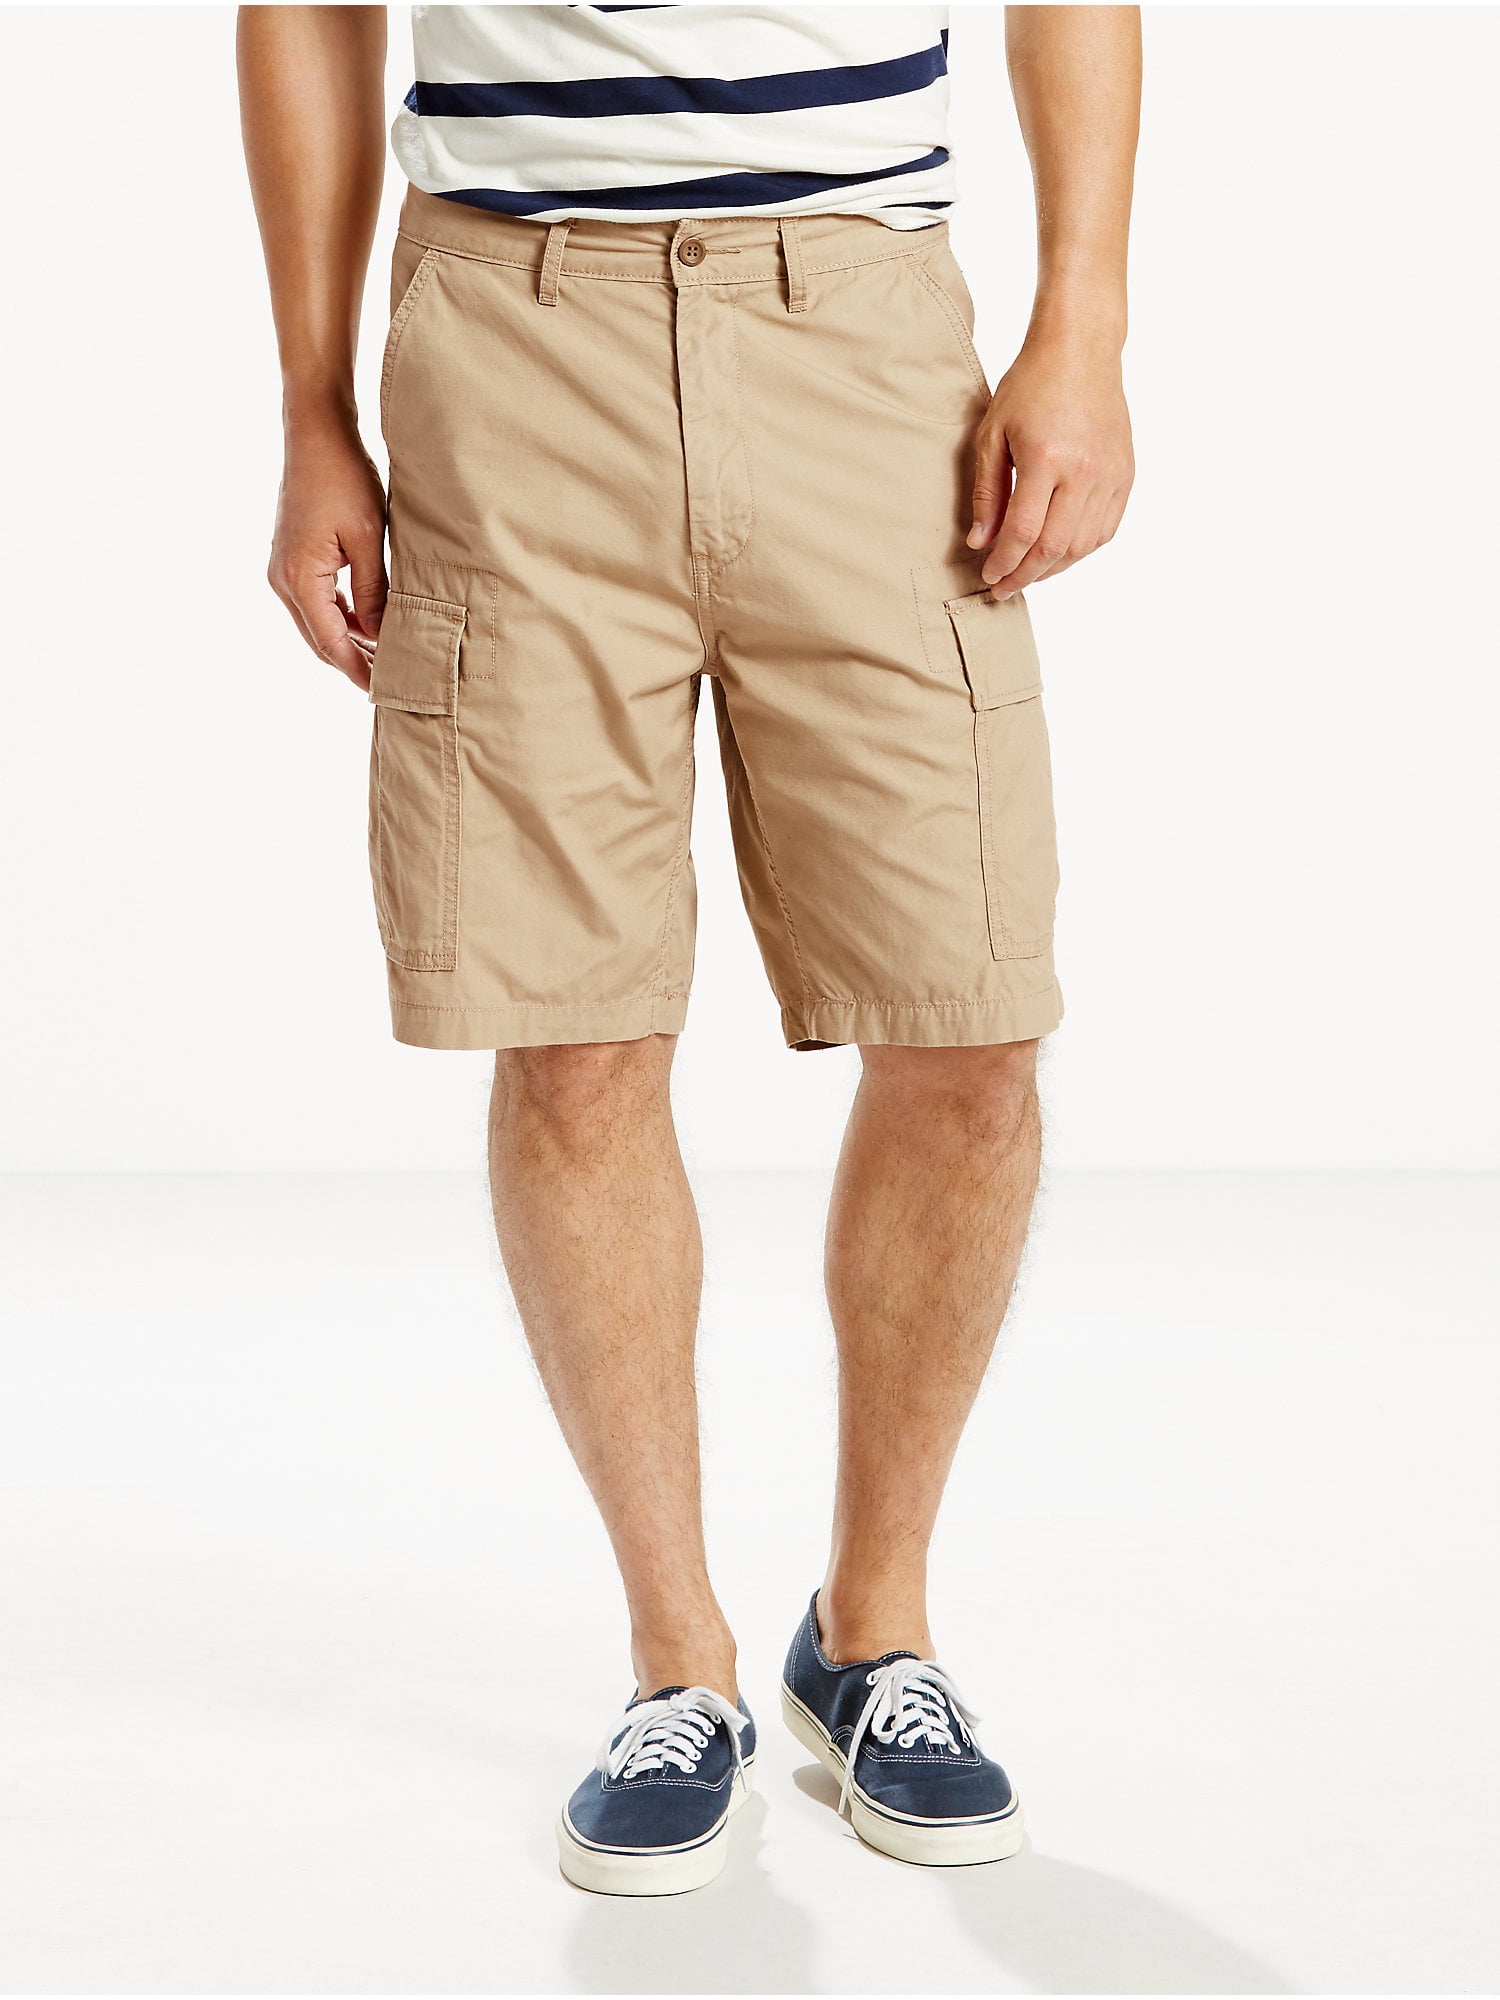 levis cargo shorts macy's